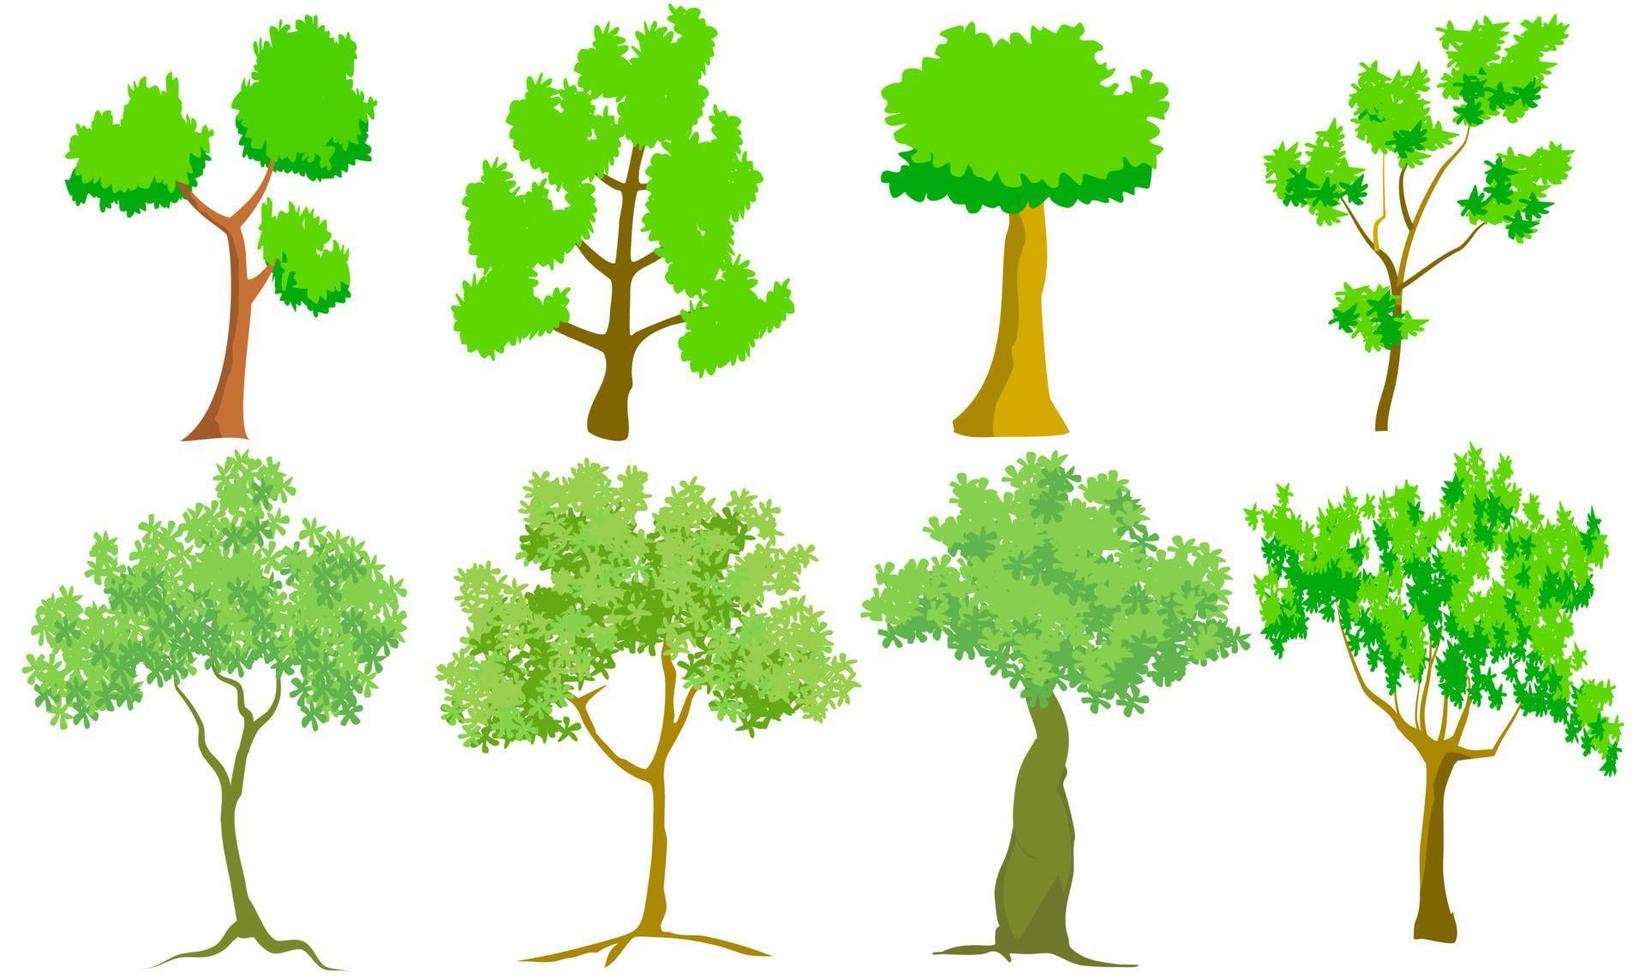 vectors tree set isolated on white background